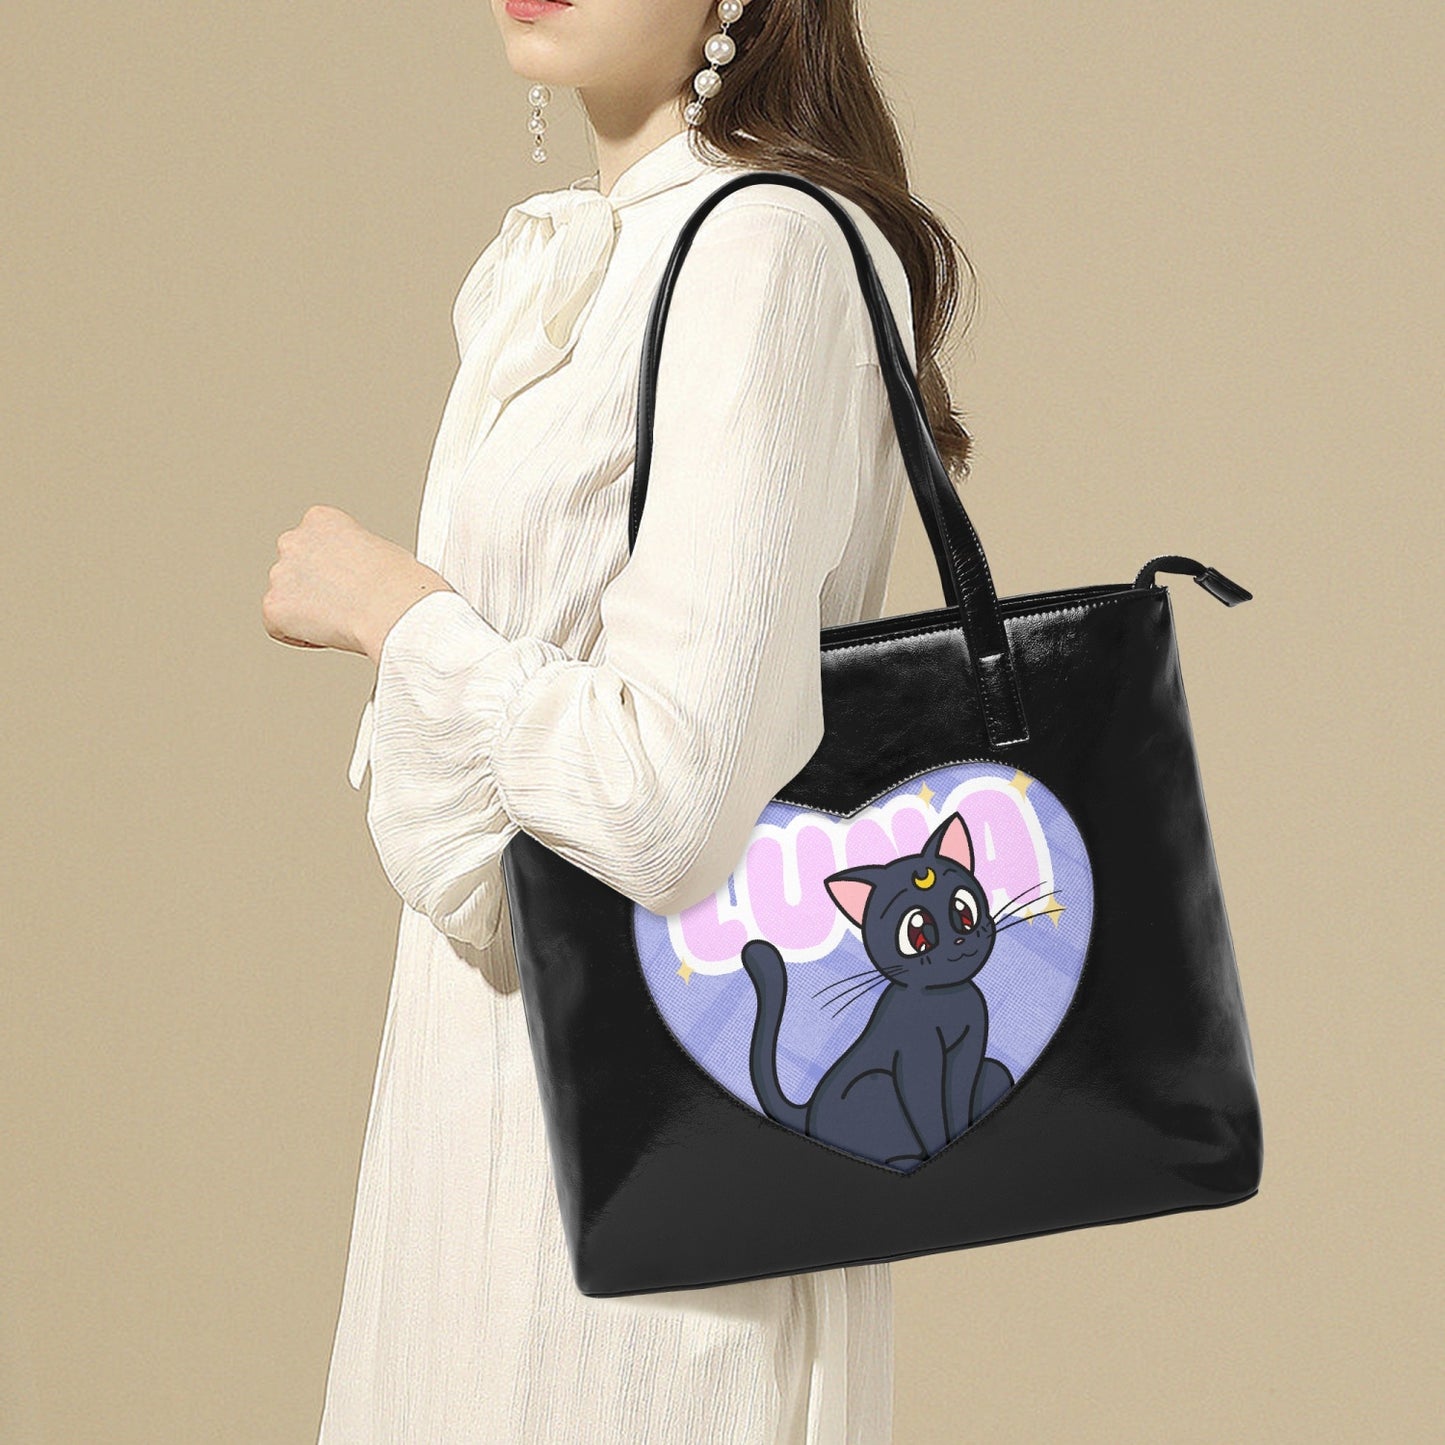 Luna Heart Tote Bag